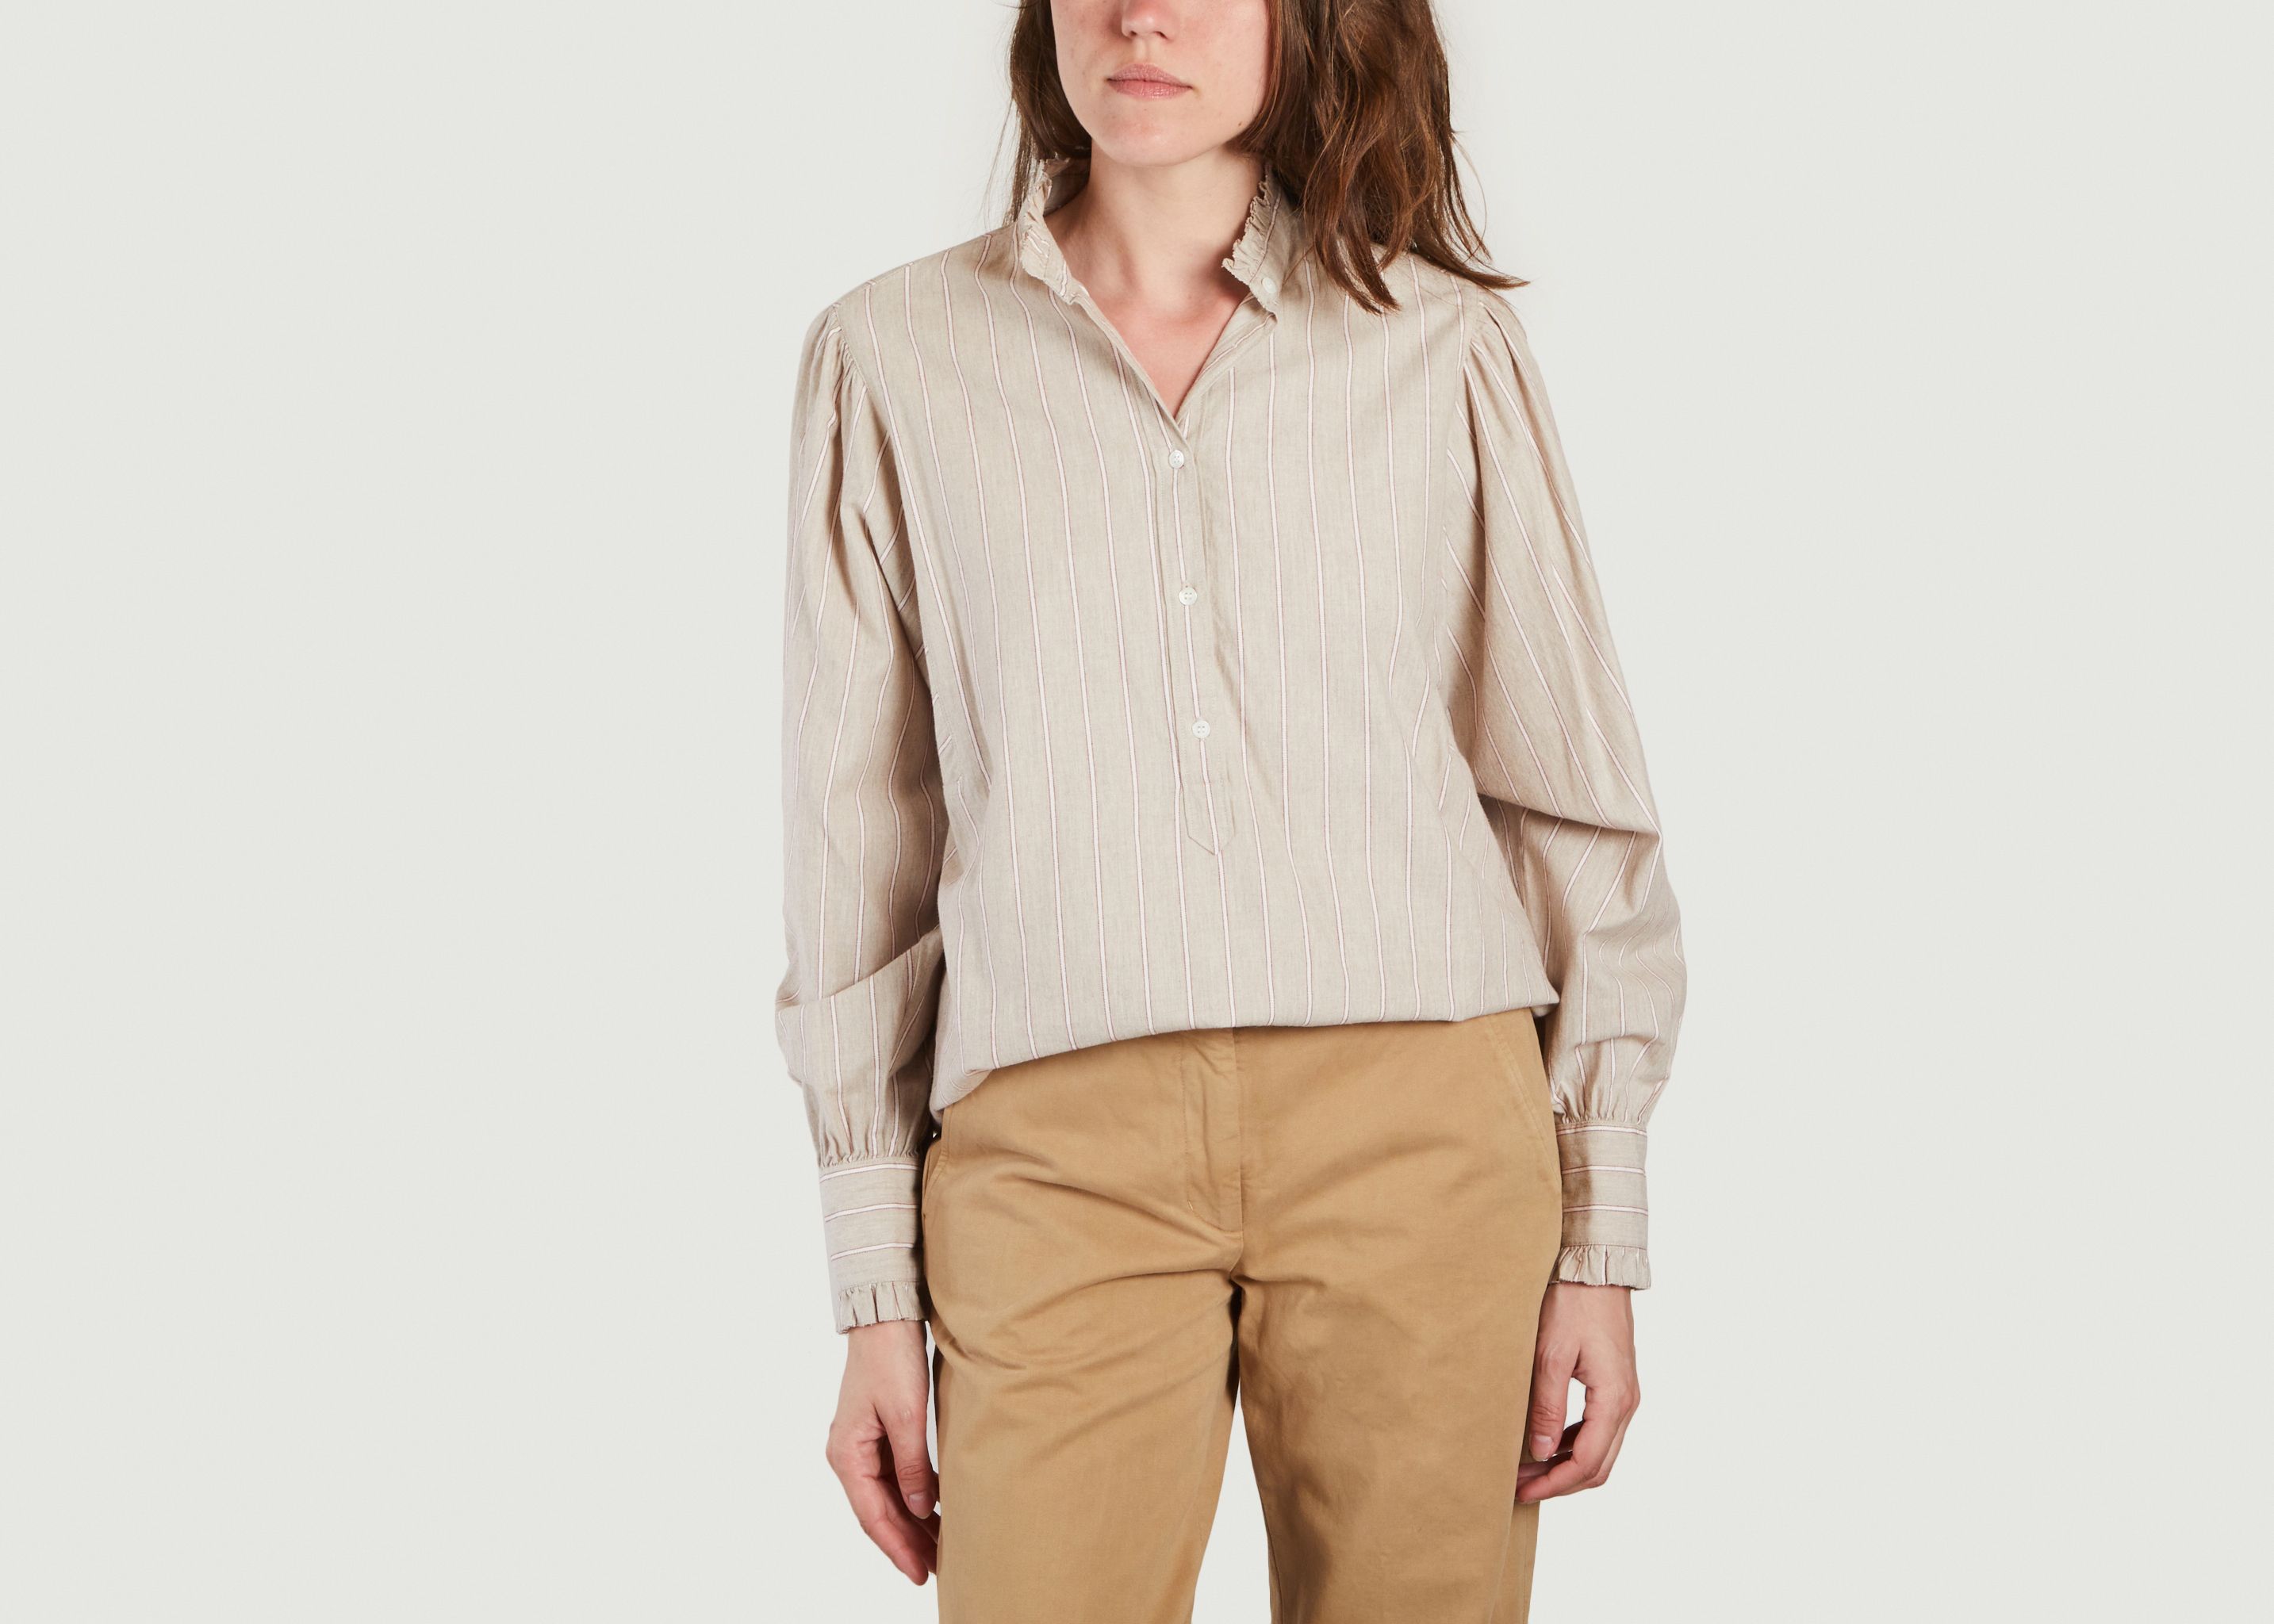 Hyper cotton striped blouse - Hartford